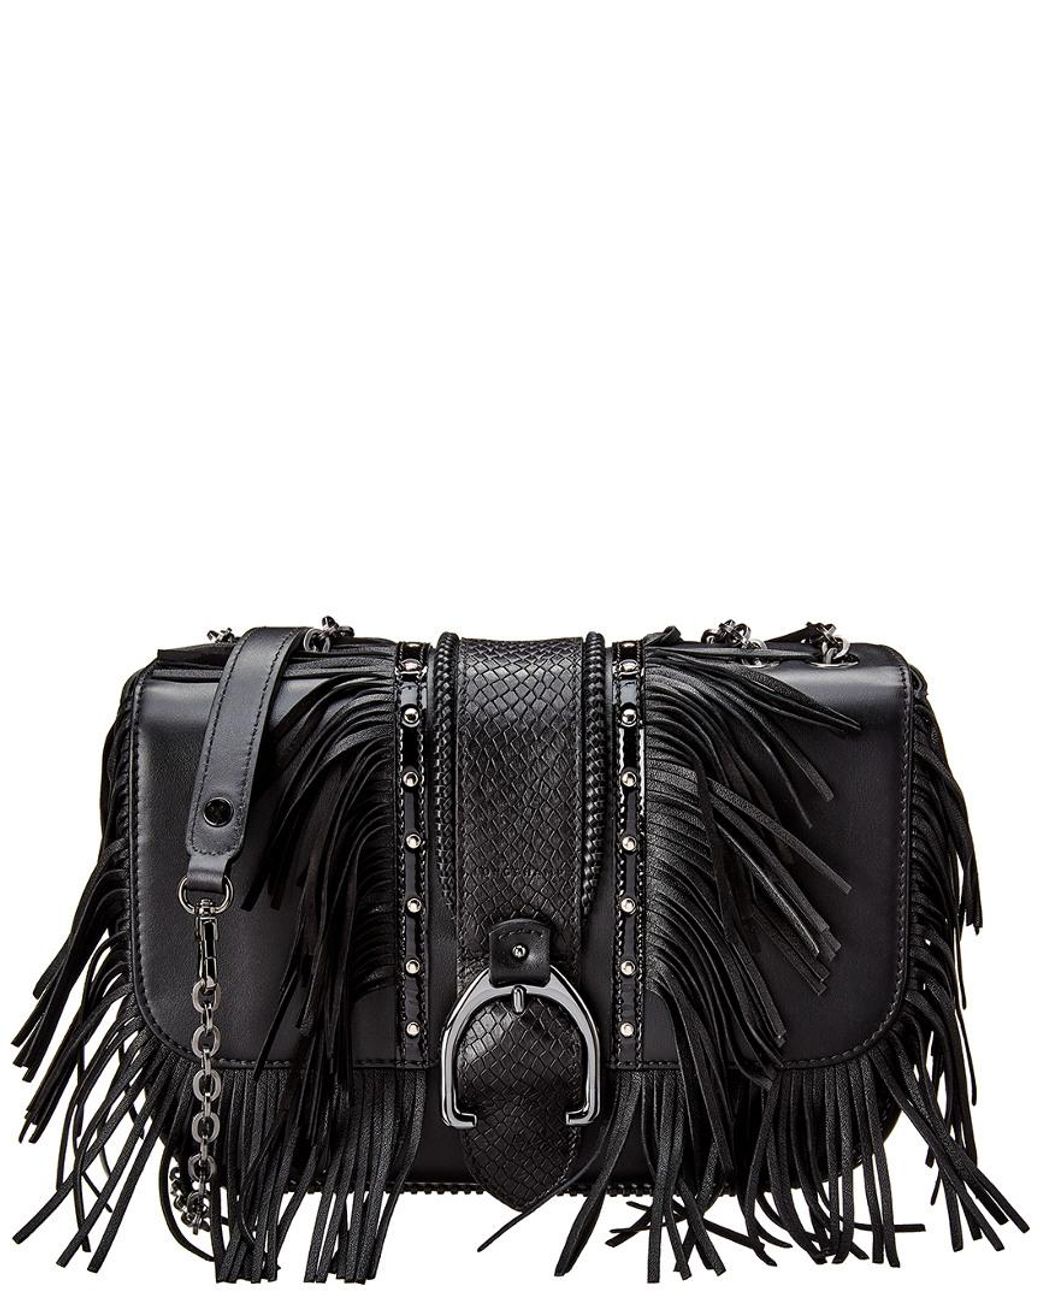 Longchamp Amazone Rock Small Leather Shoulder Bag in Black | Lyst Australia